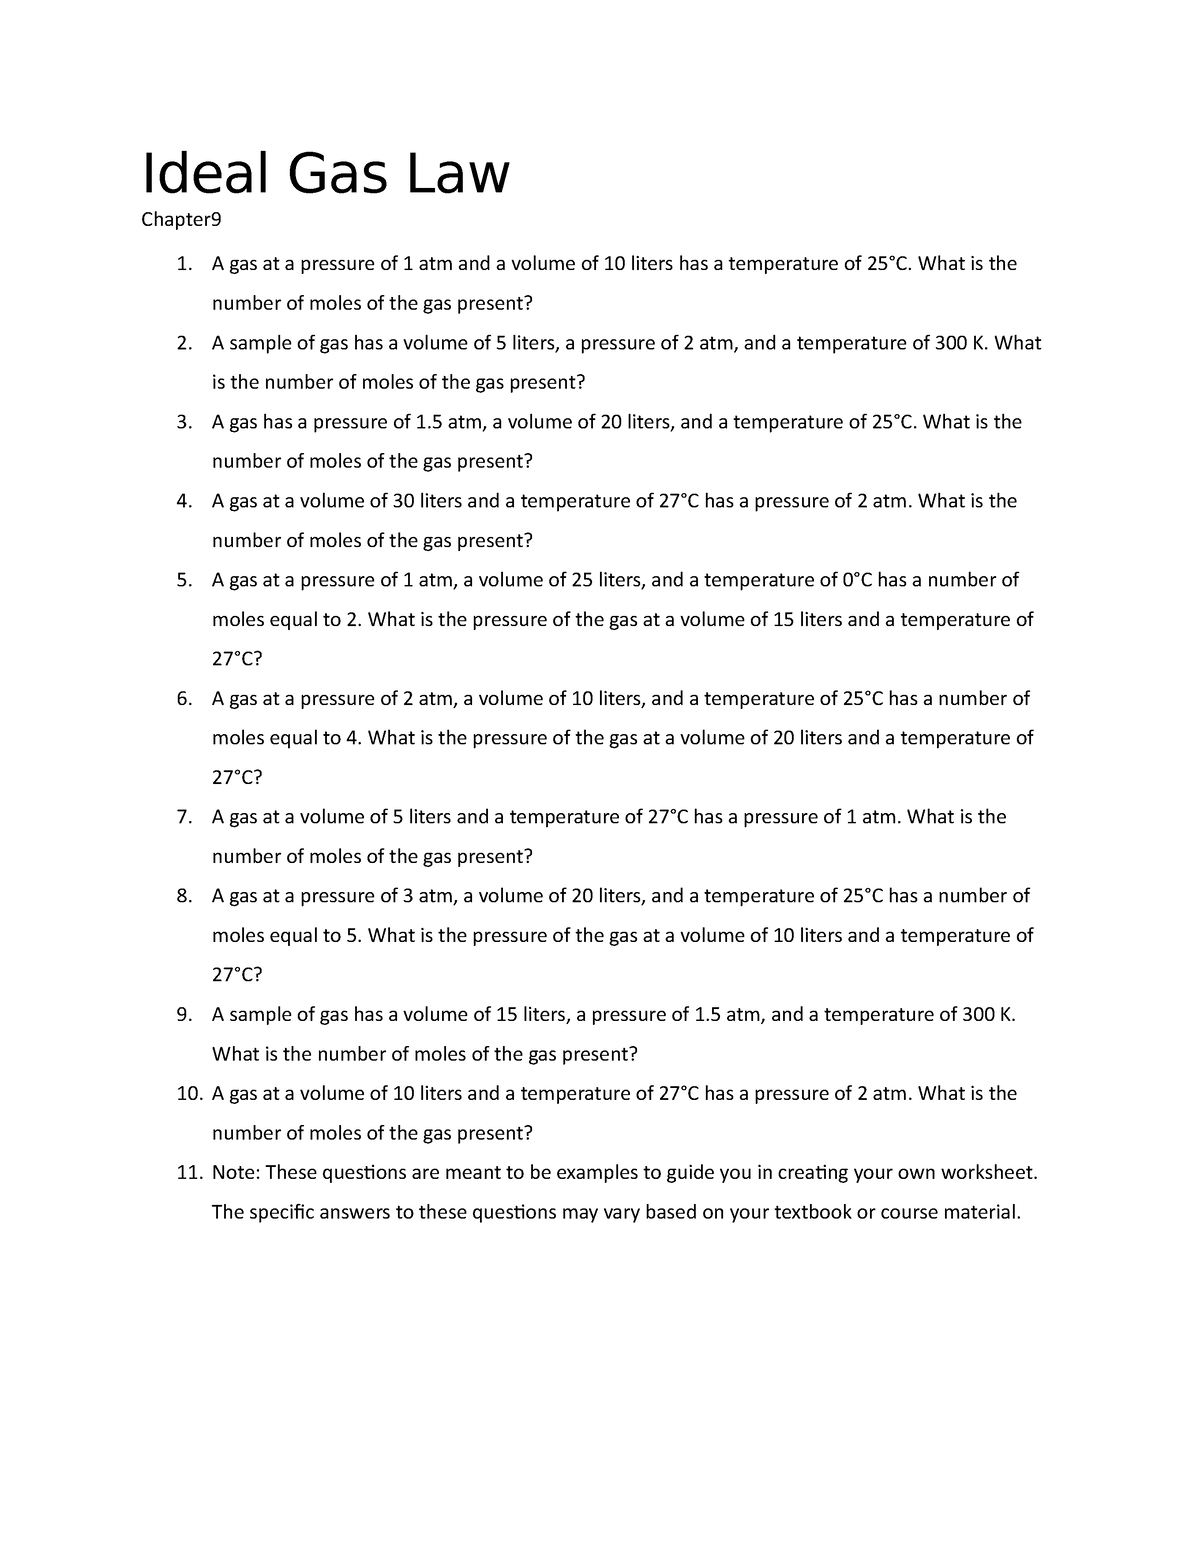 gas law essay questions